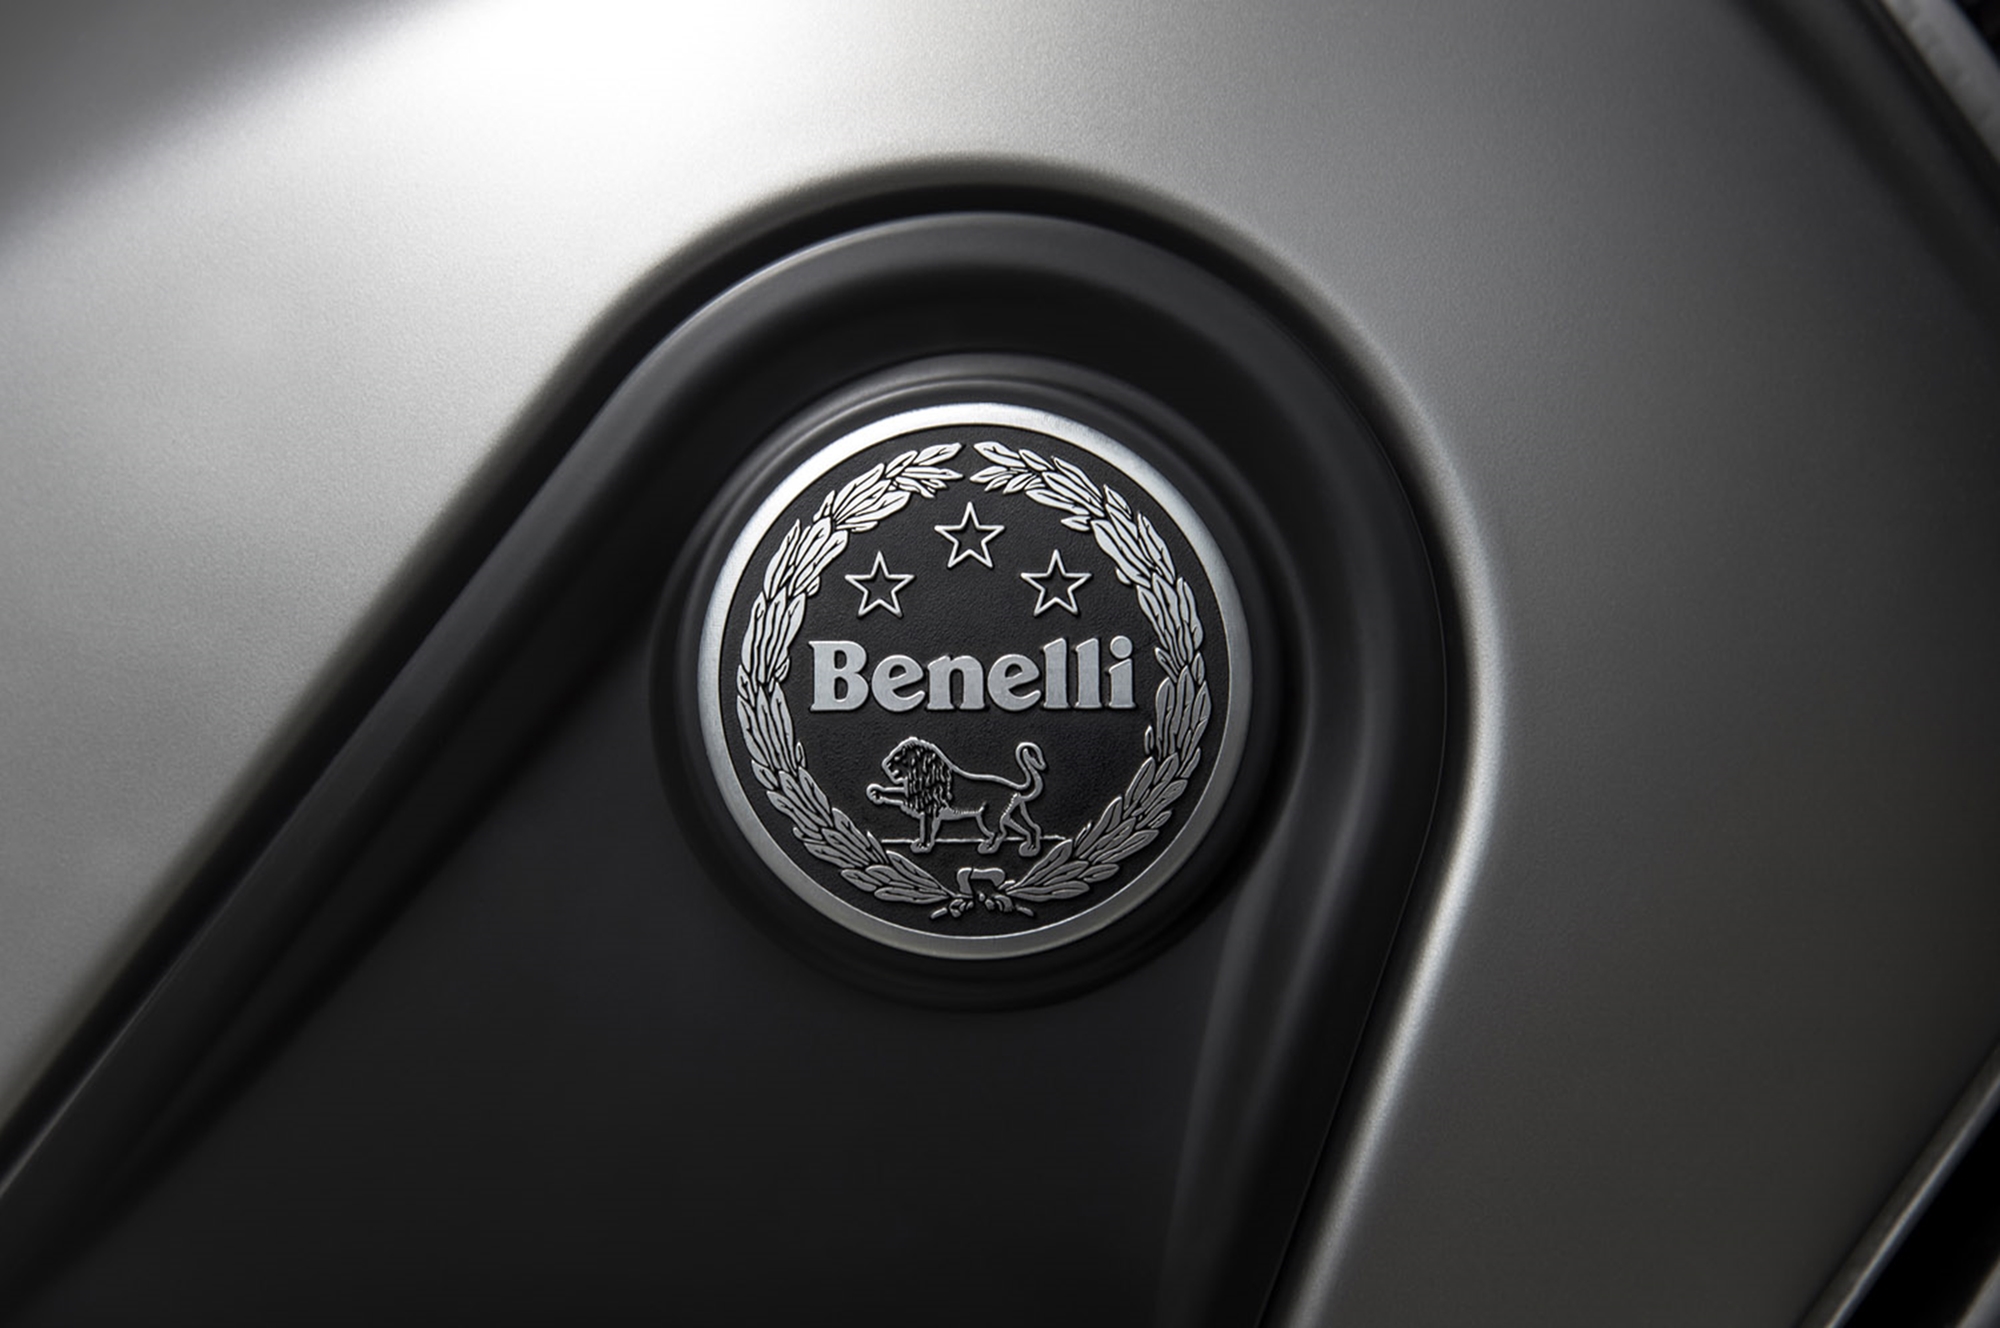 Logo Benelli.